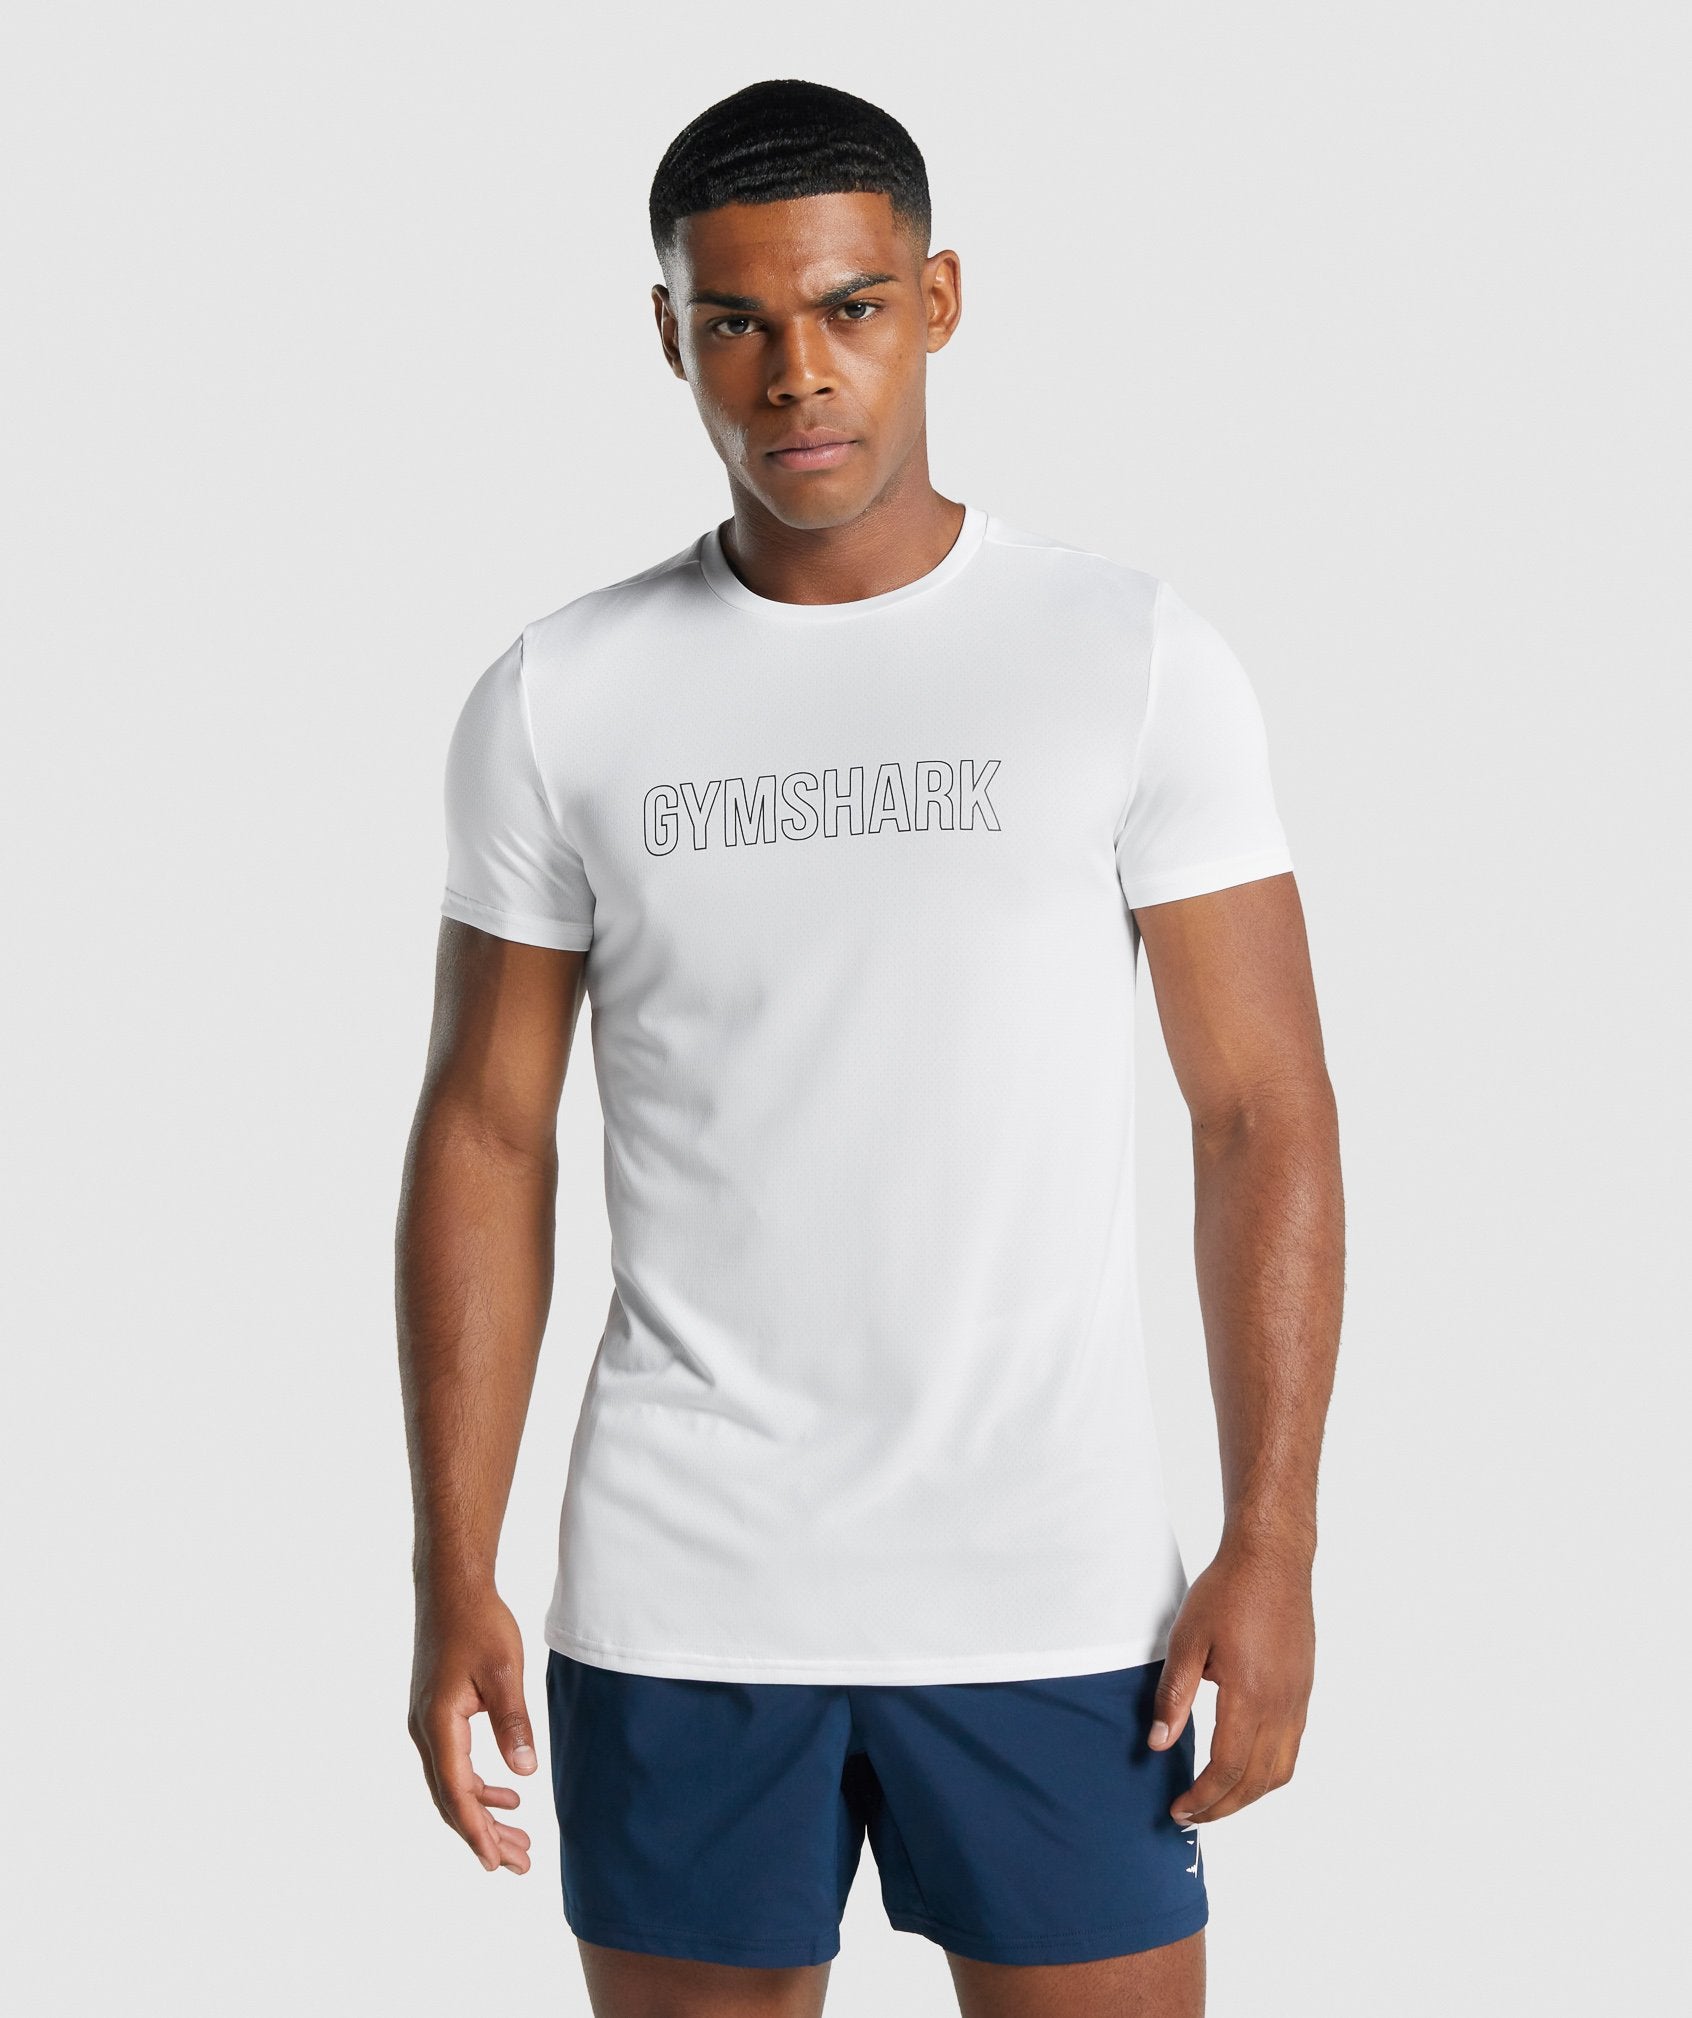 Gymshark Arrival Graphic T-Shirt - White